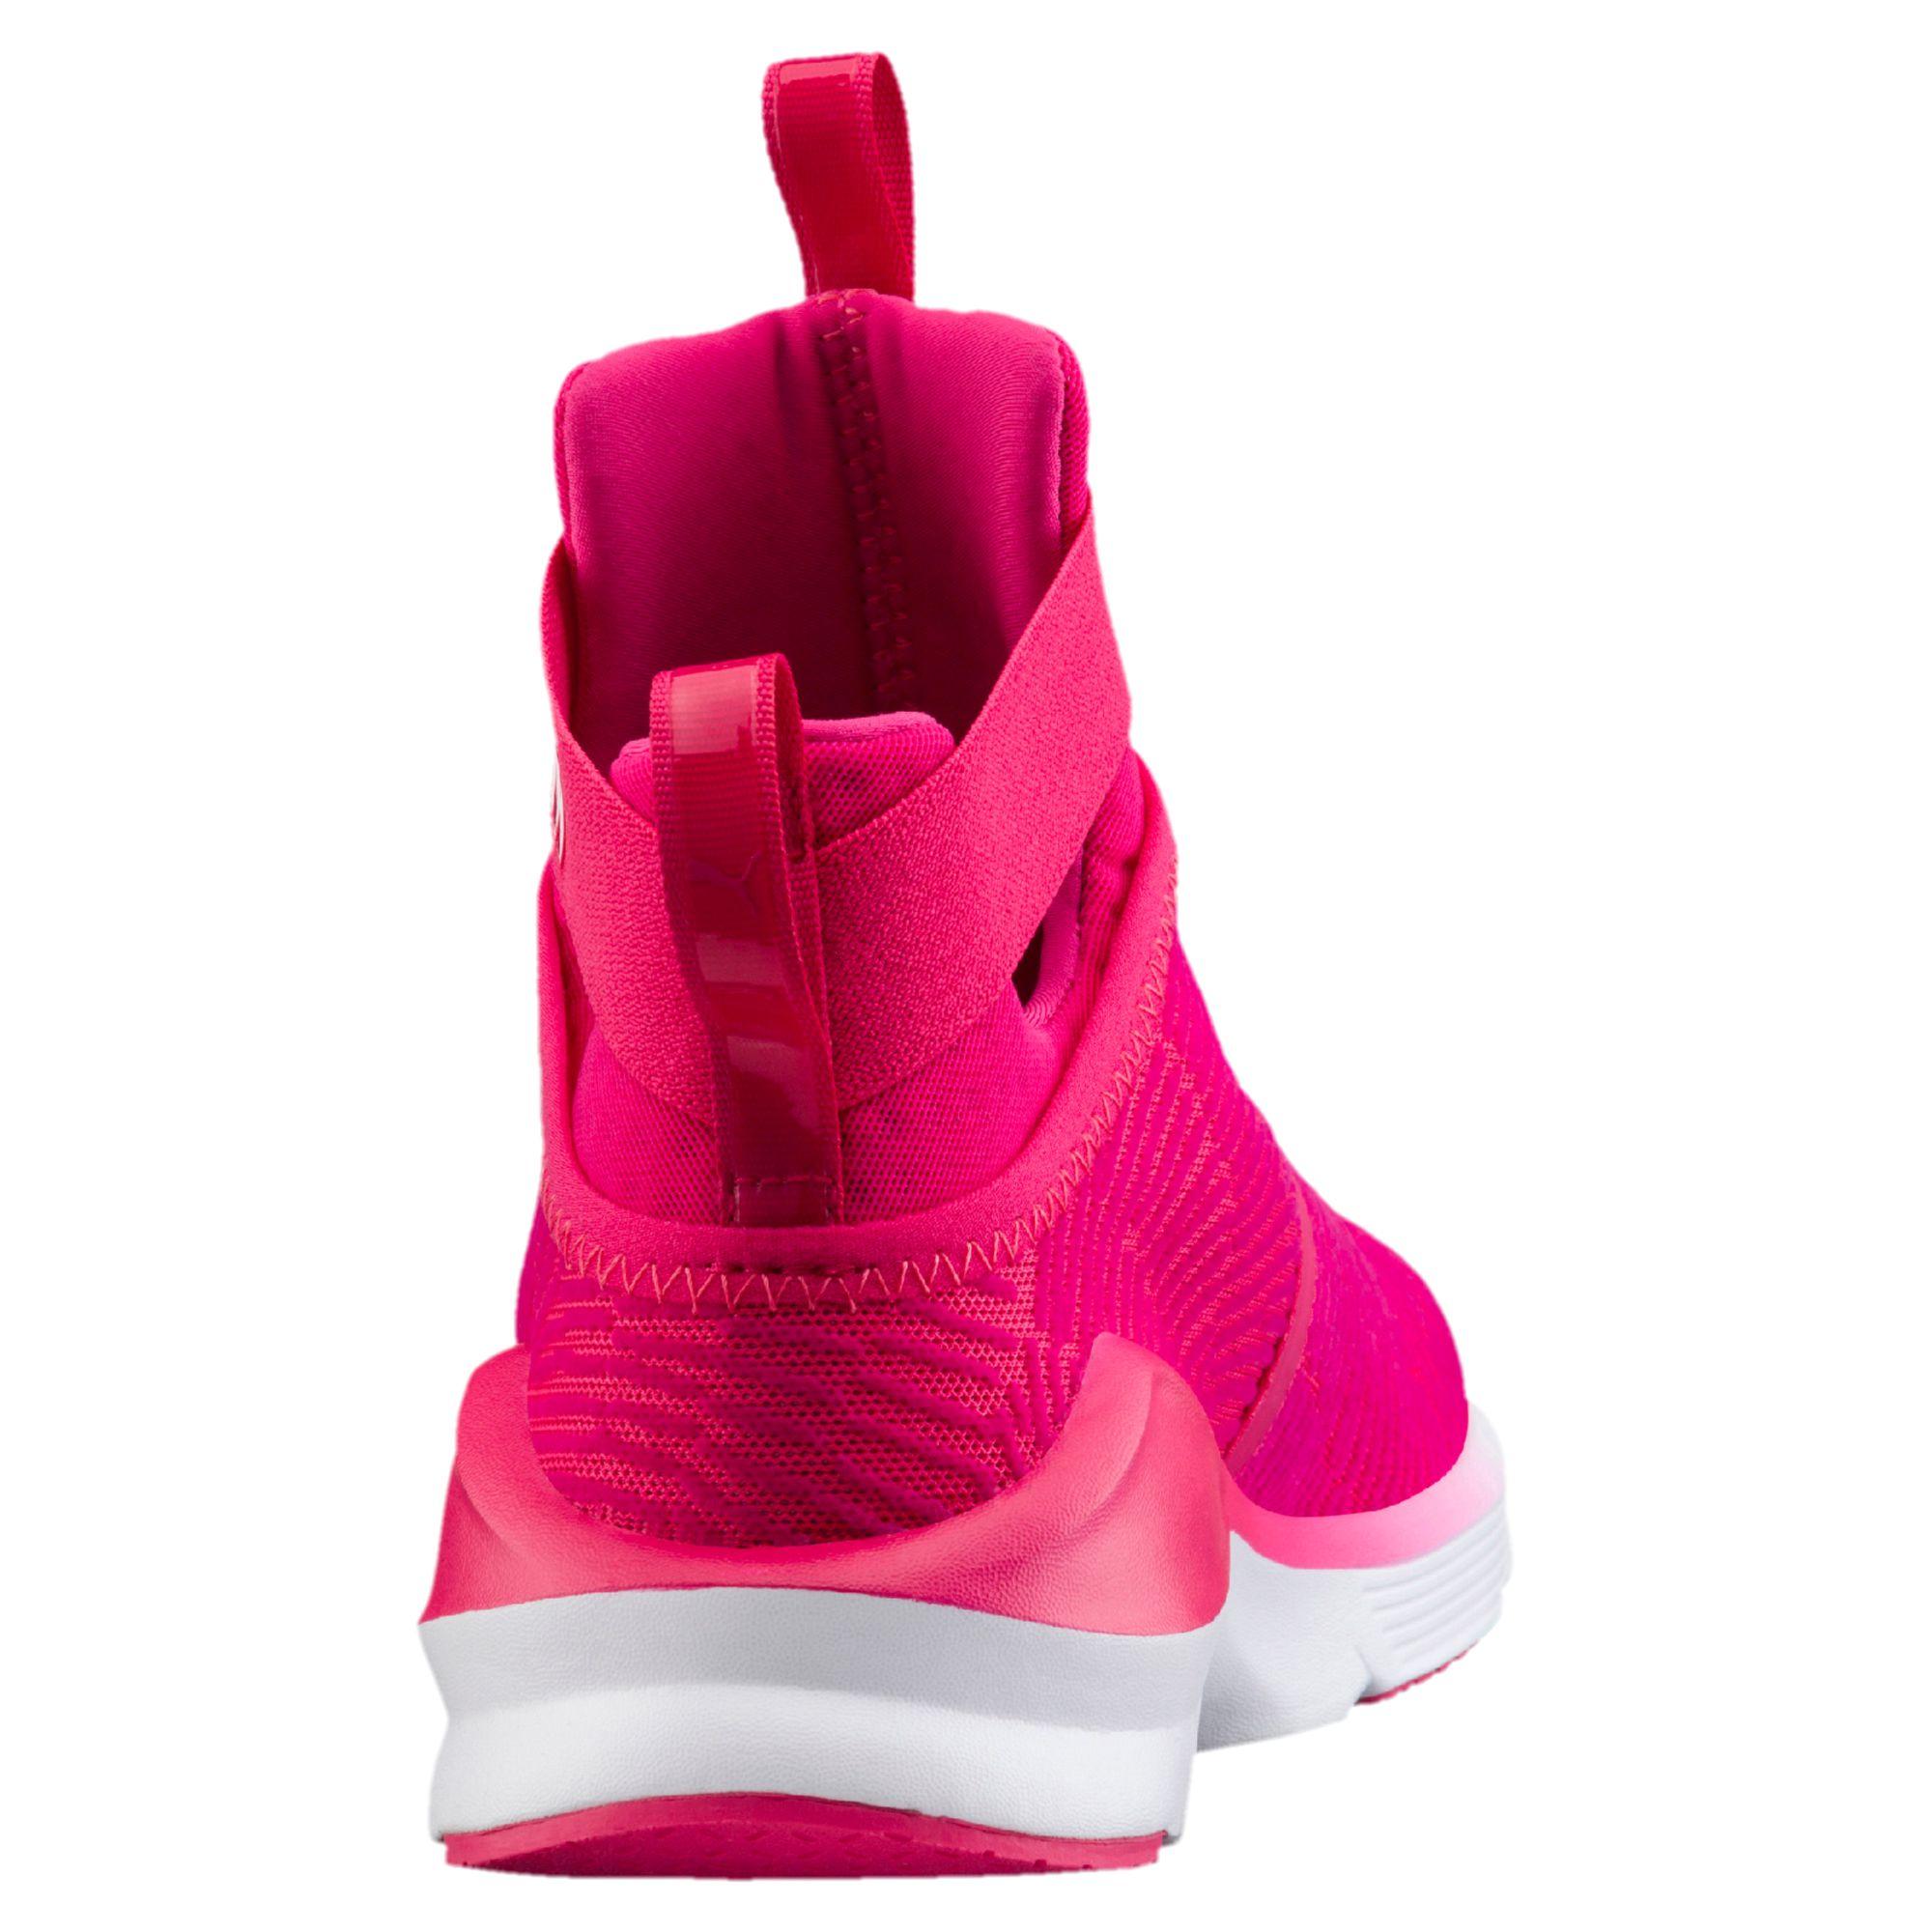 PUMA Rubber Fierce Strap Flocking Women's Training Shoes in Pink - Lyst